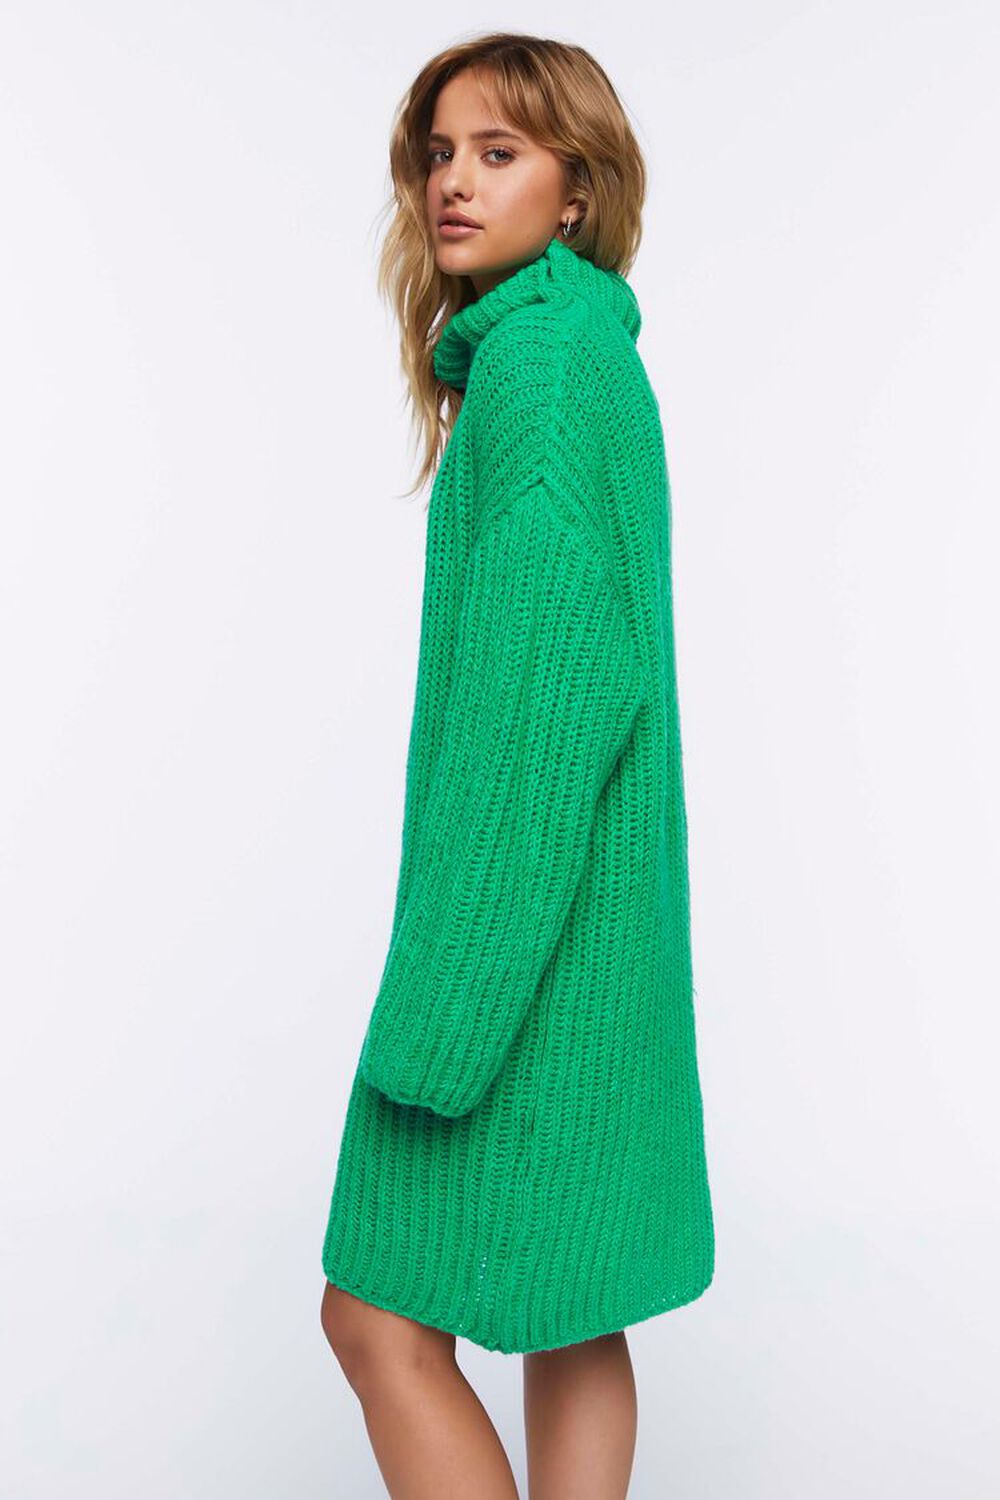 GREEN Chunky Knit Sweater Dress, image 2